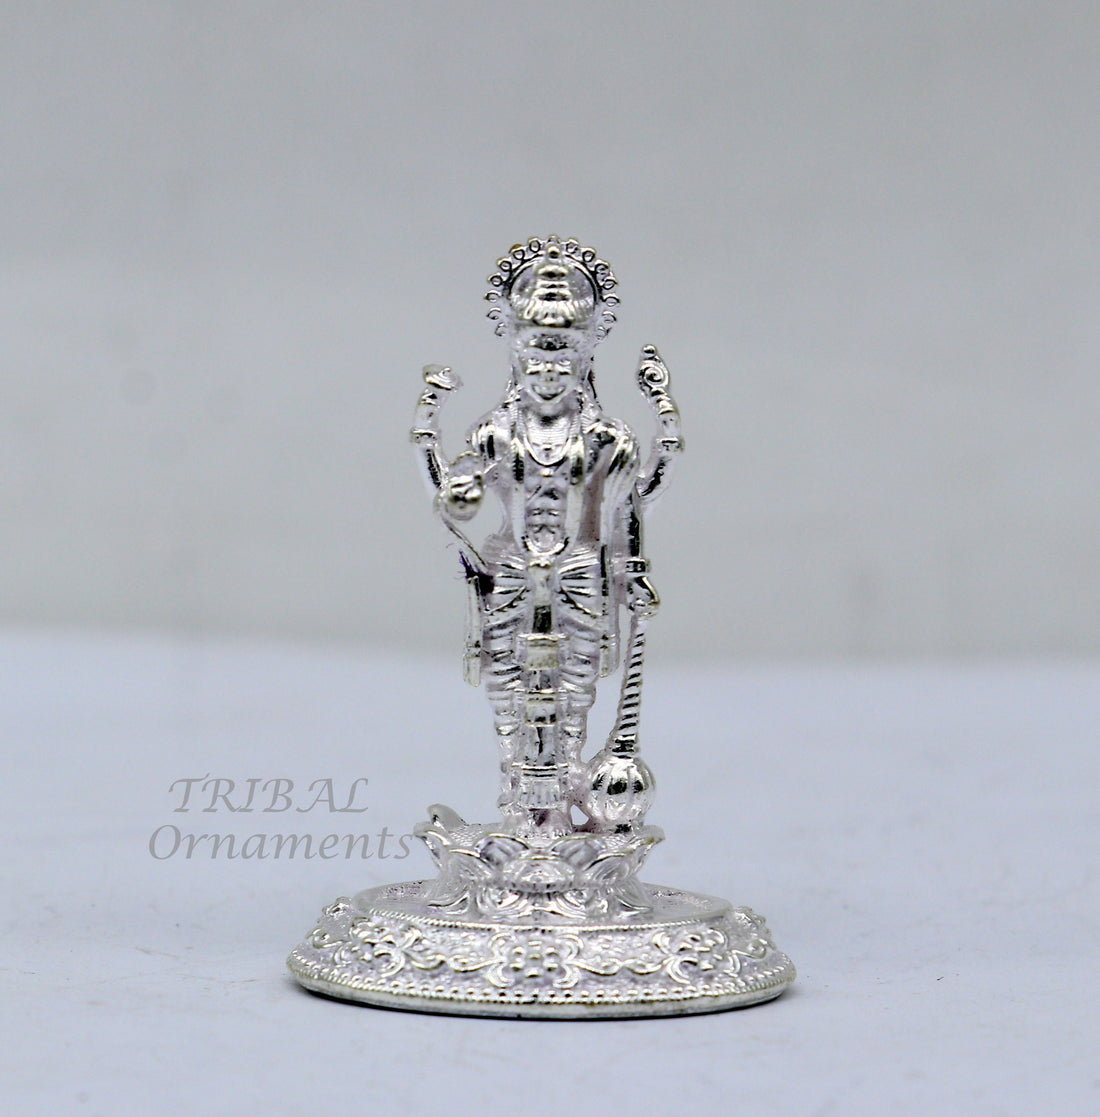 1.2" Standing lord Narayana or lord Vishnu 925 sterling silver statue figurine, Vishnu Murti , amazing  puja worshipping figurine art596 - TRIBAL ORNAMENTS